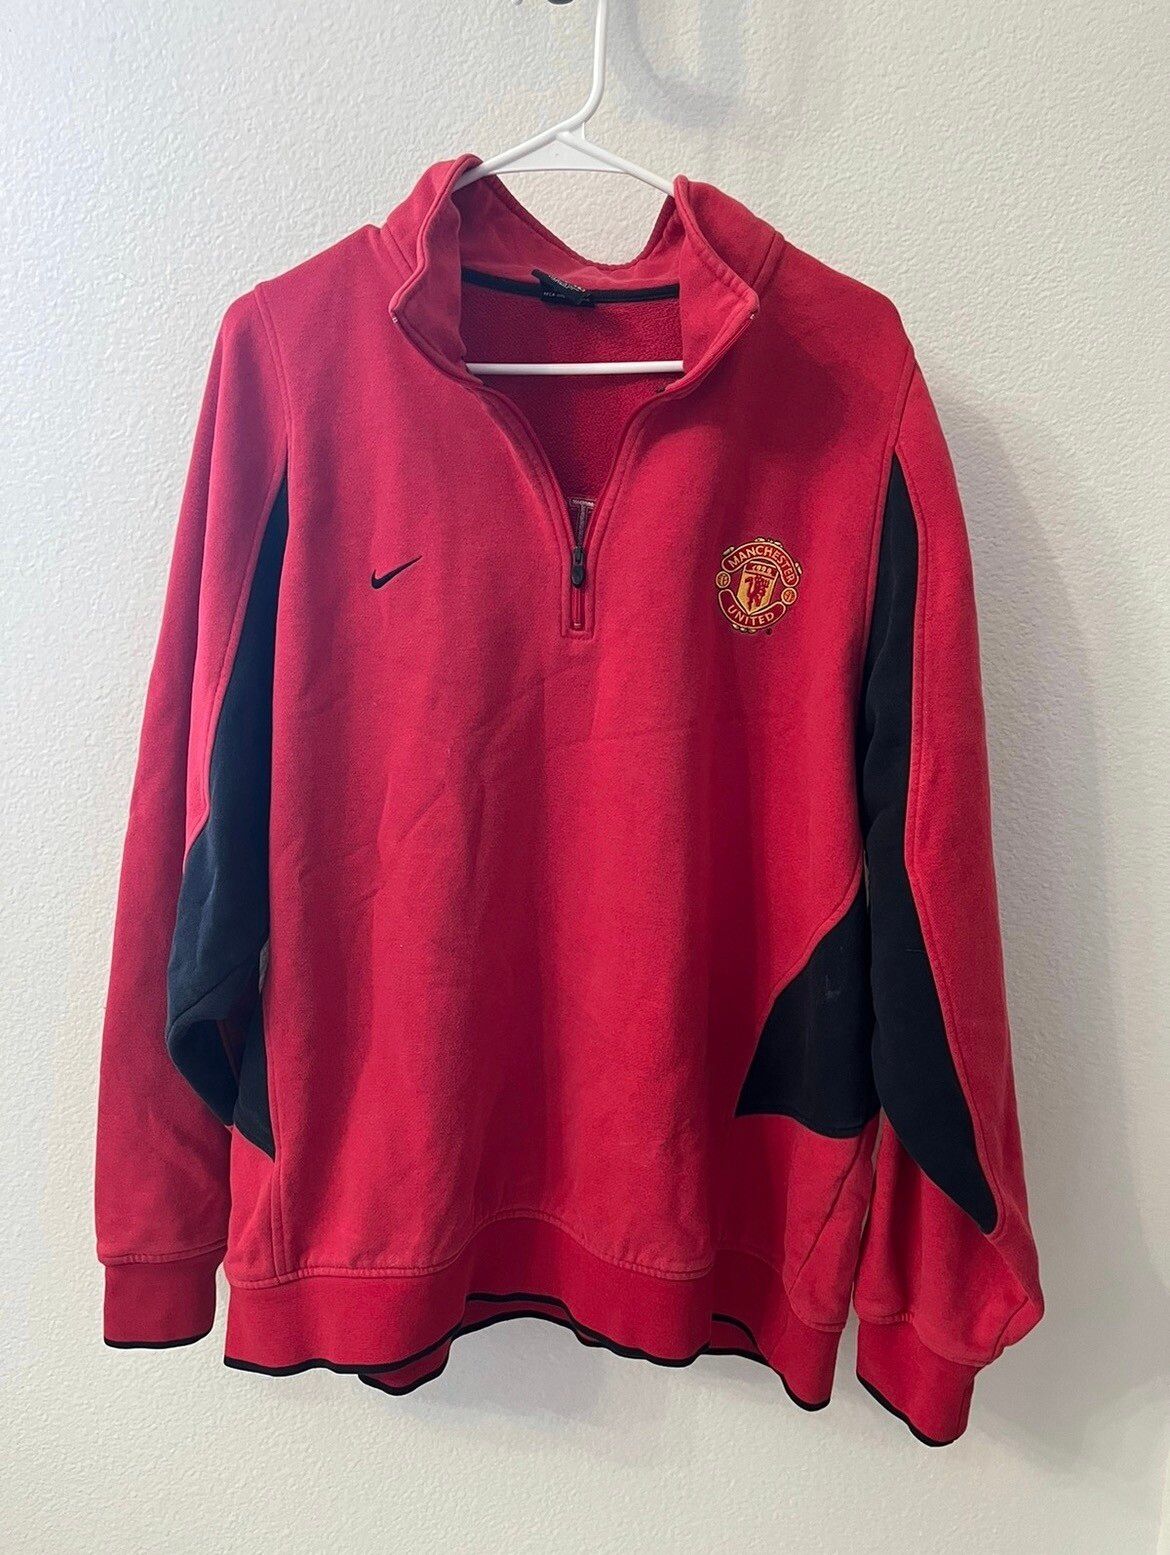 Nike Vintage Nike “Manchester United” Jacket Size US XL / EU 56 / 4 - 1 Preview